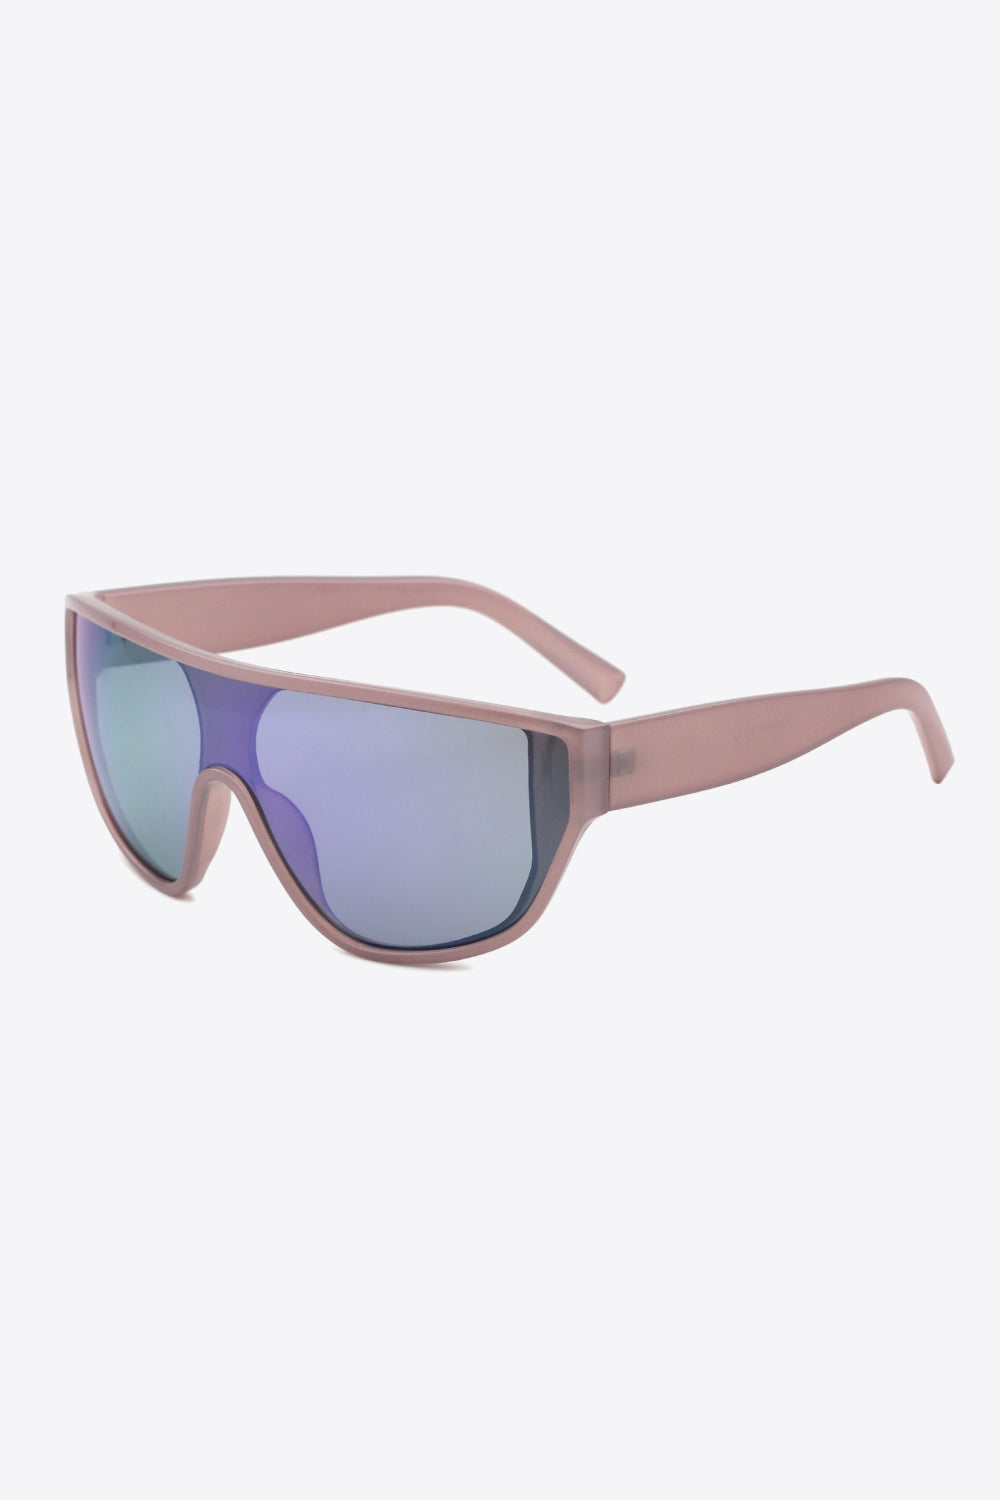 UV400 Polycarbonate Wayfarer Sunglasses - Sunglasses - FITGGINS